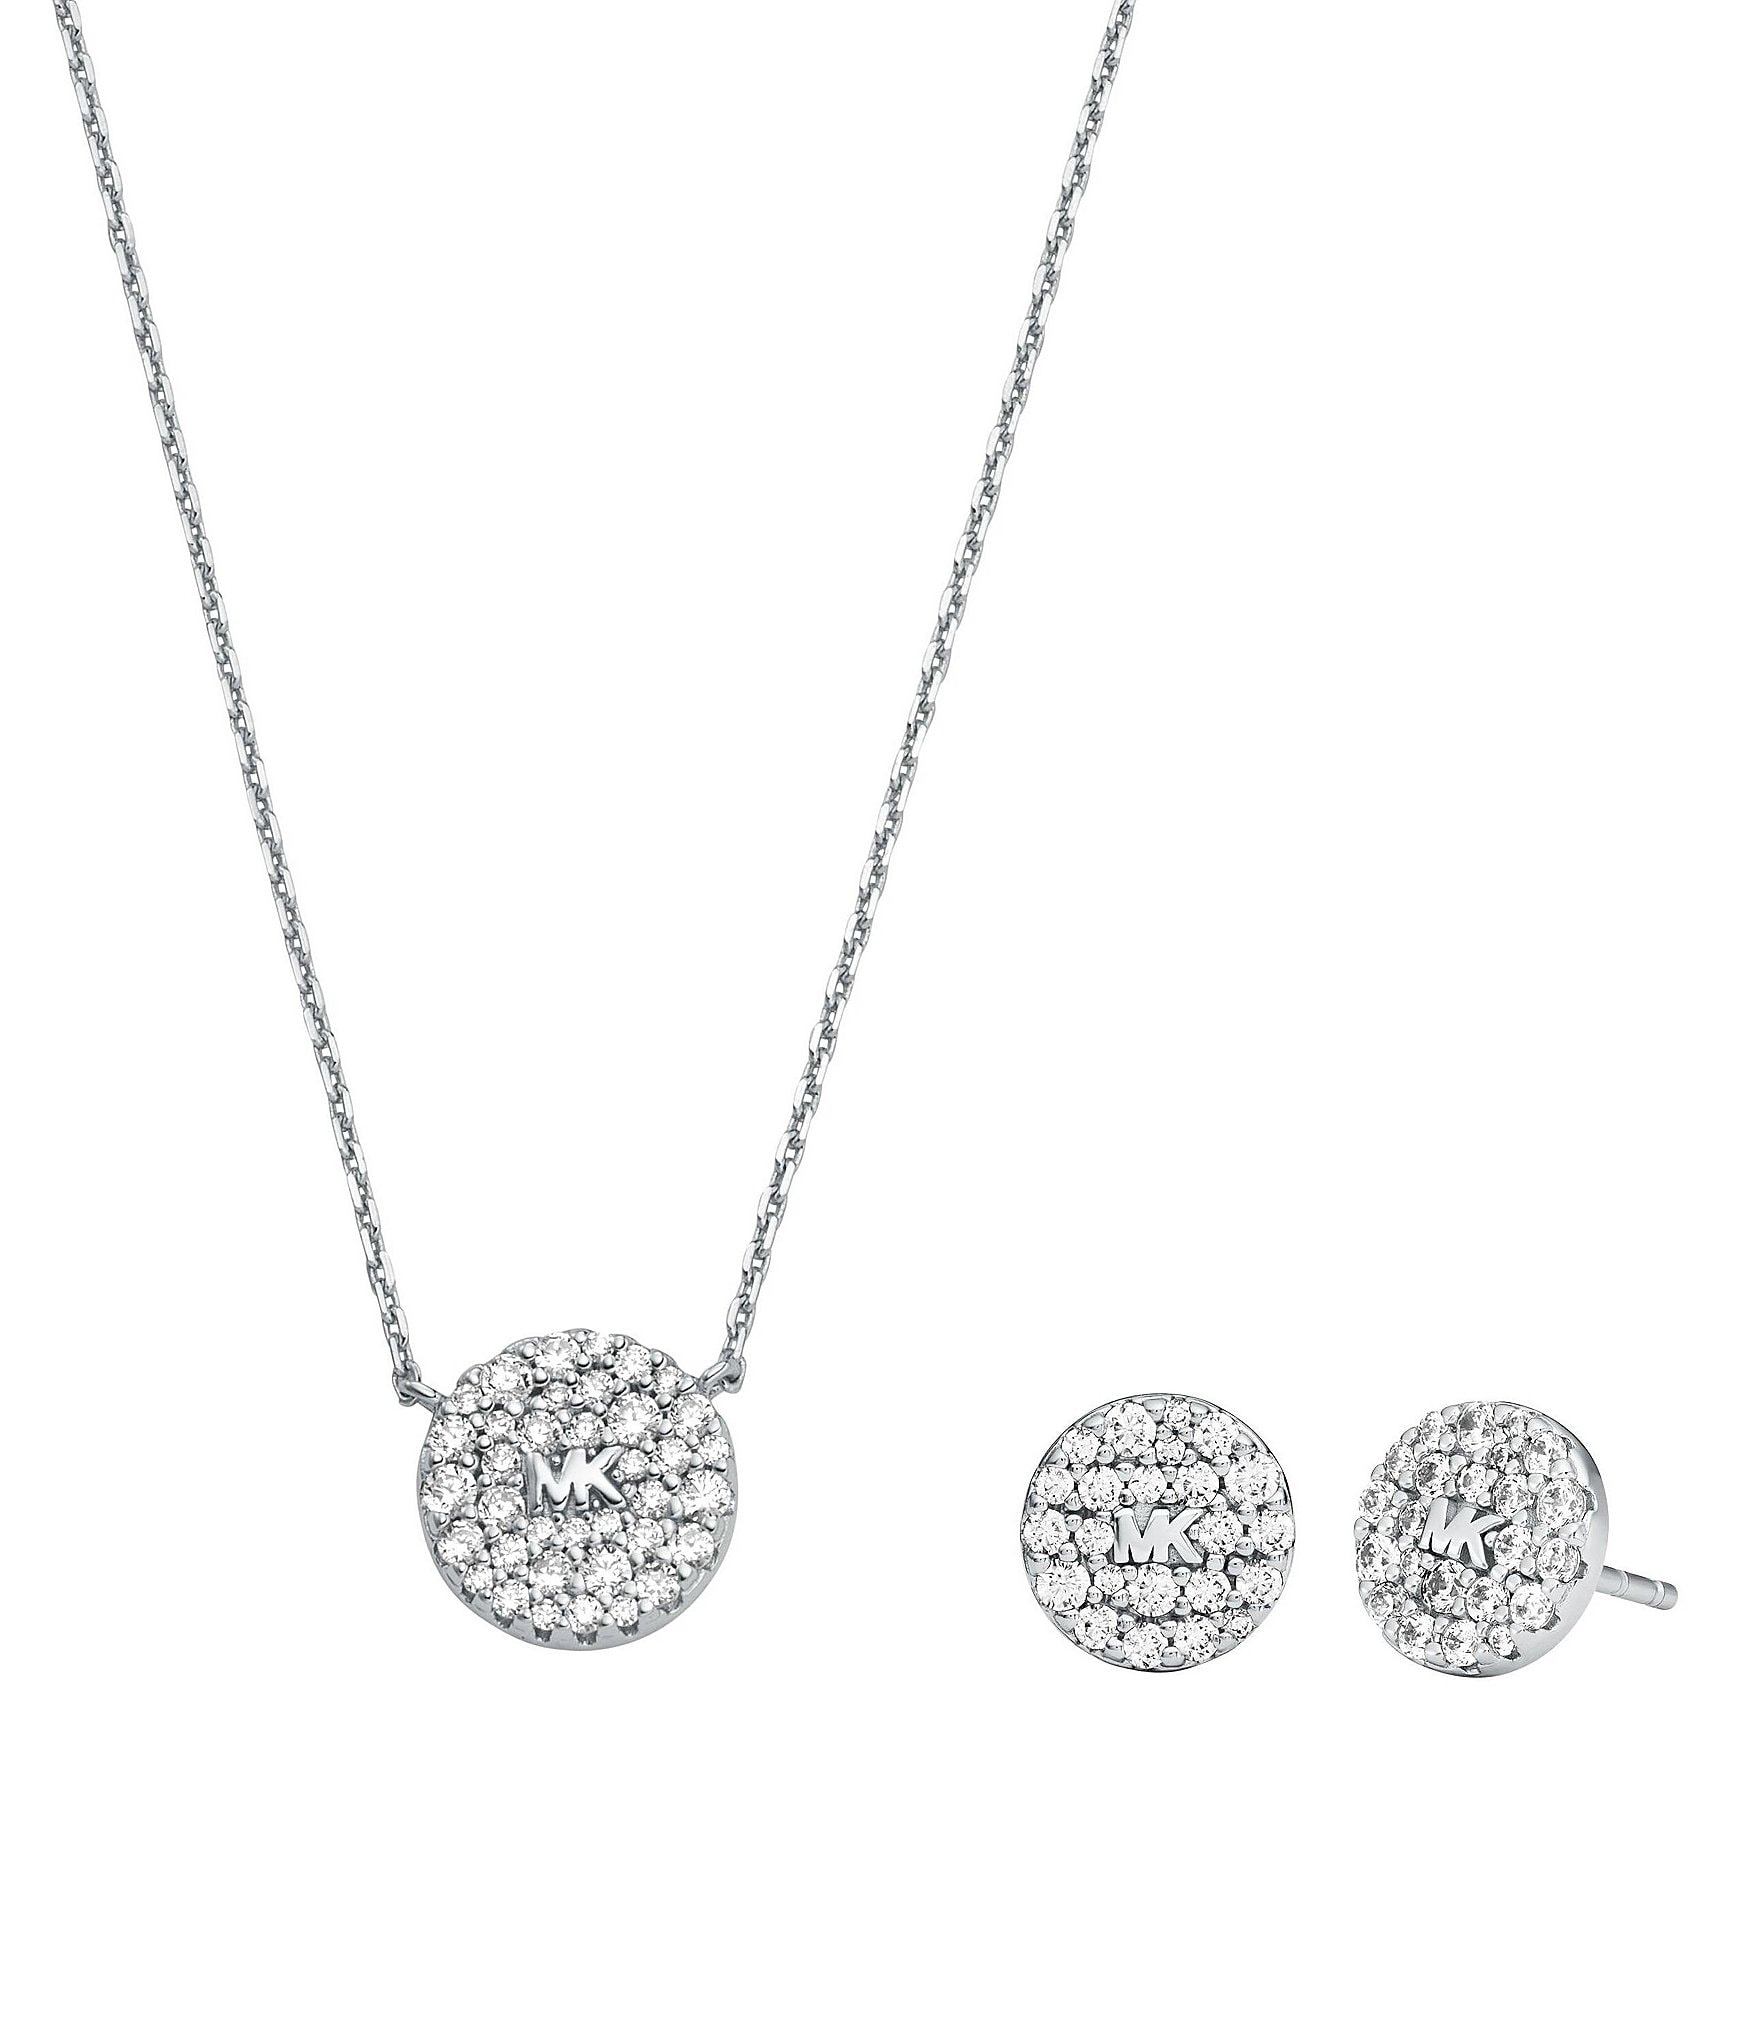 Michael Kors Heart Pendant Necklace & Stud Earrings in 14K Gold-Plated  Sterling Silver, 14K Rose Gold-Plated Sterling Silver or Sterling Silver  Box Set | Bloomingdale's